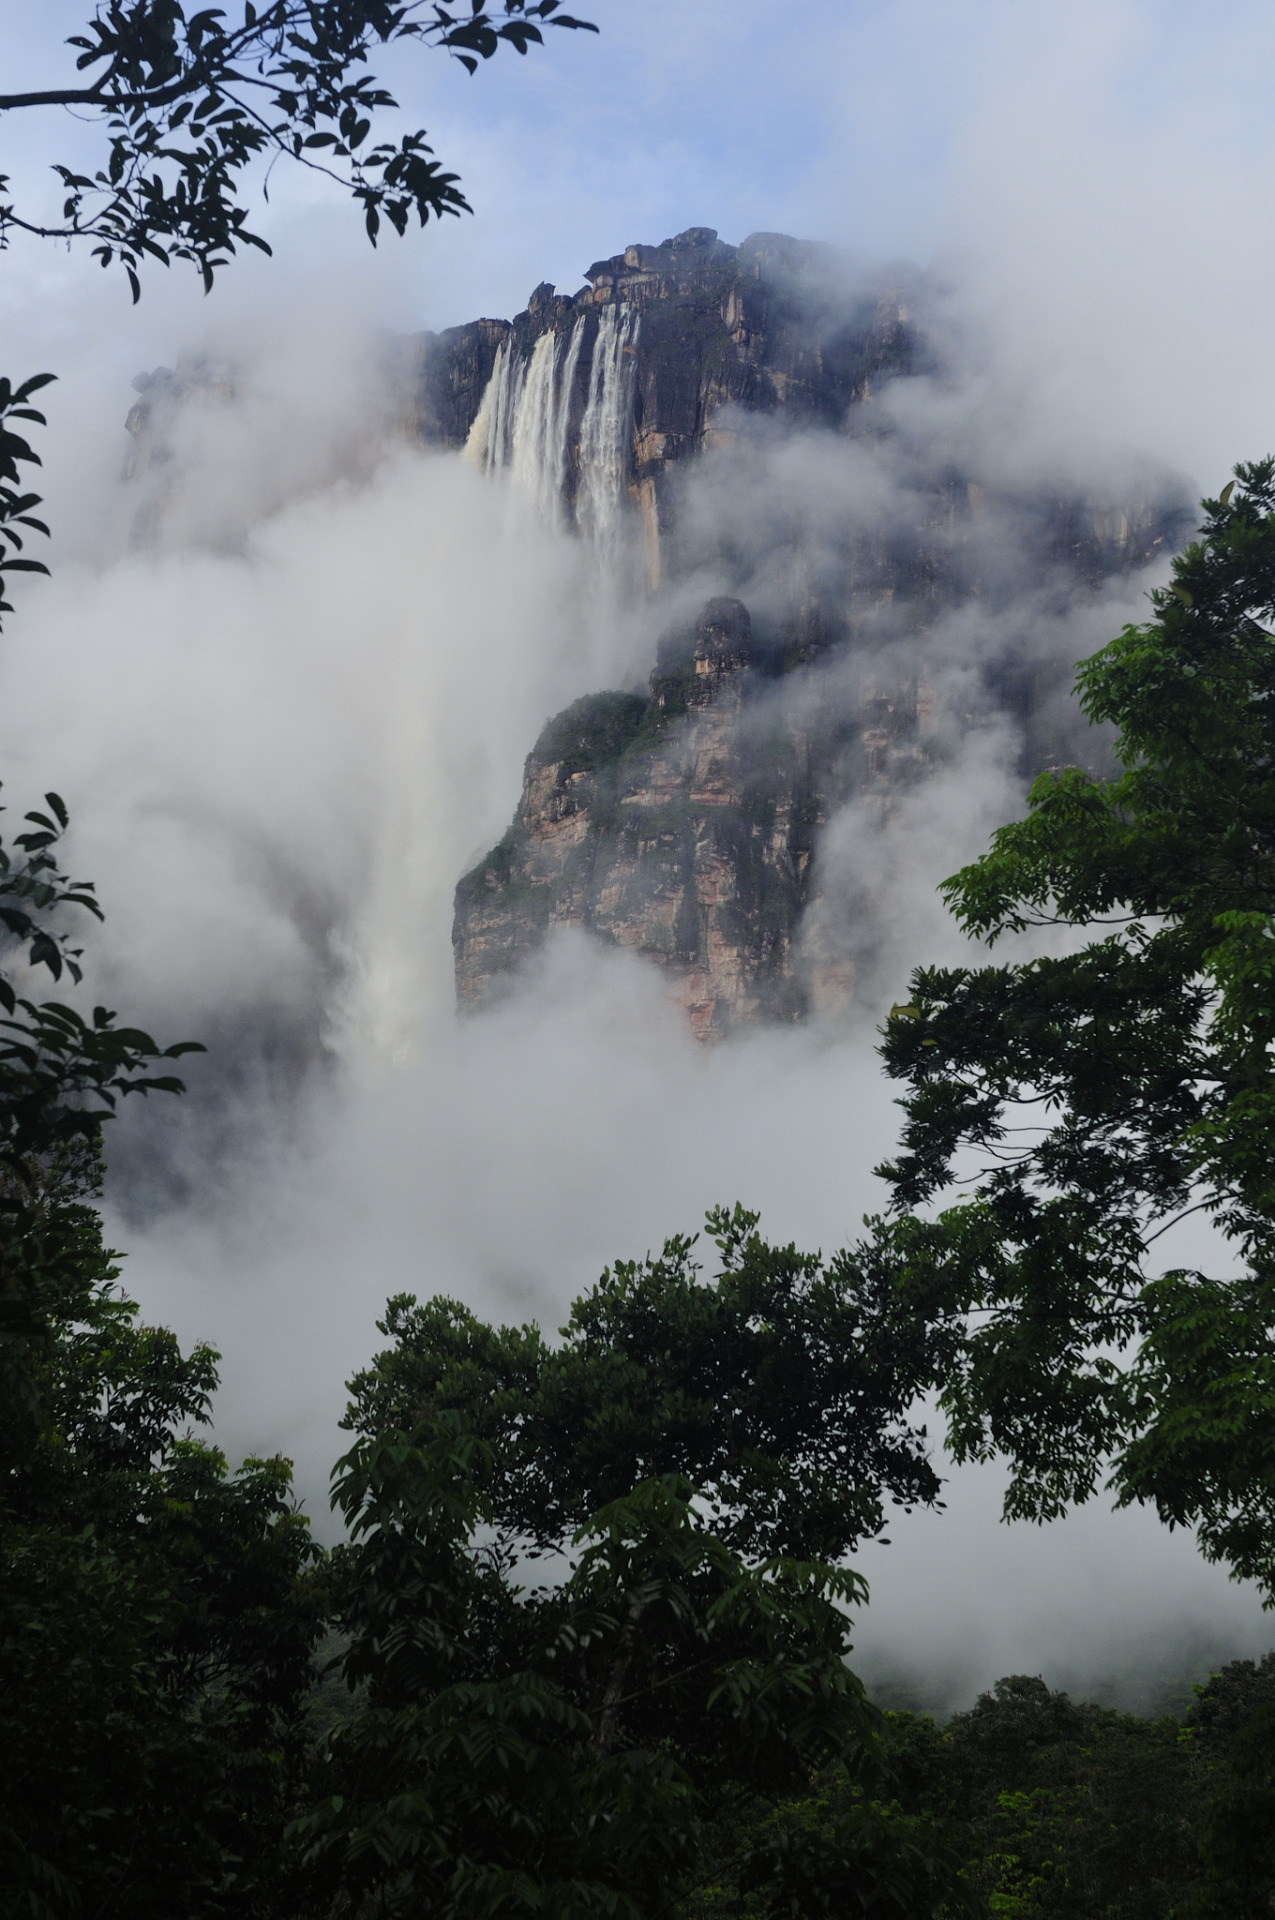 “ Angel waterfall in the clouds / Venezuela .”